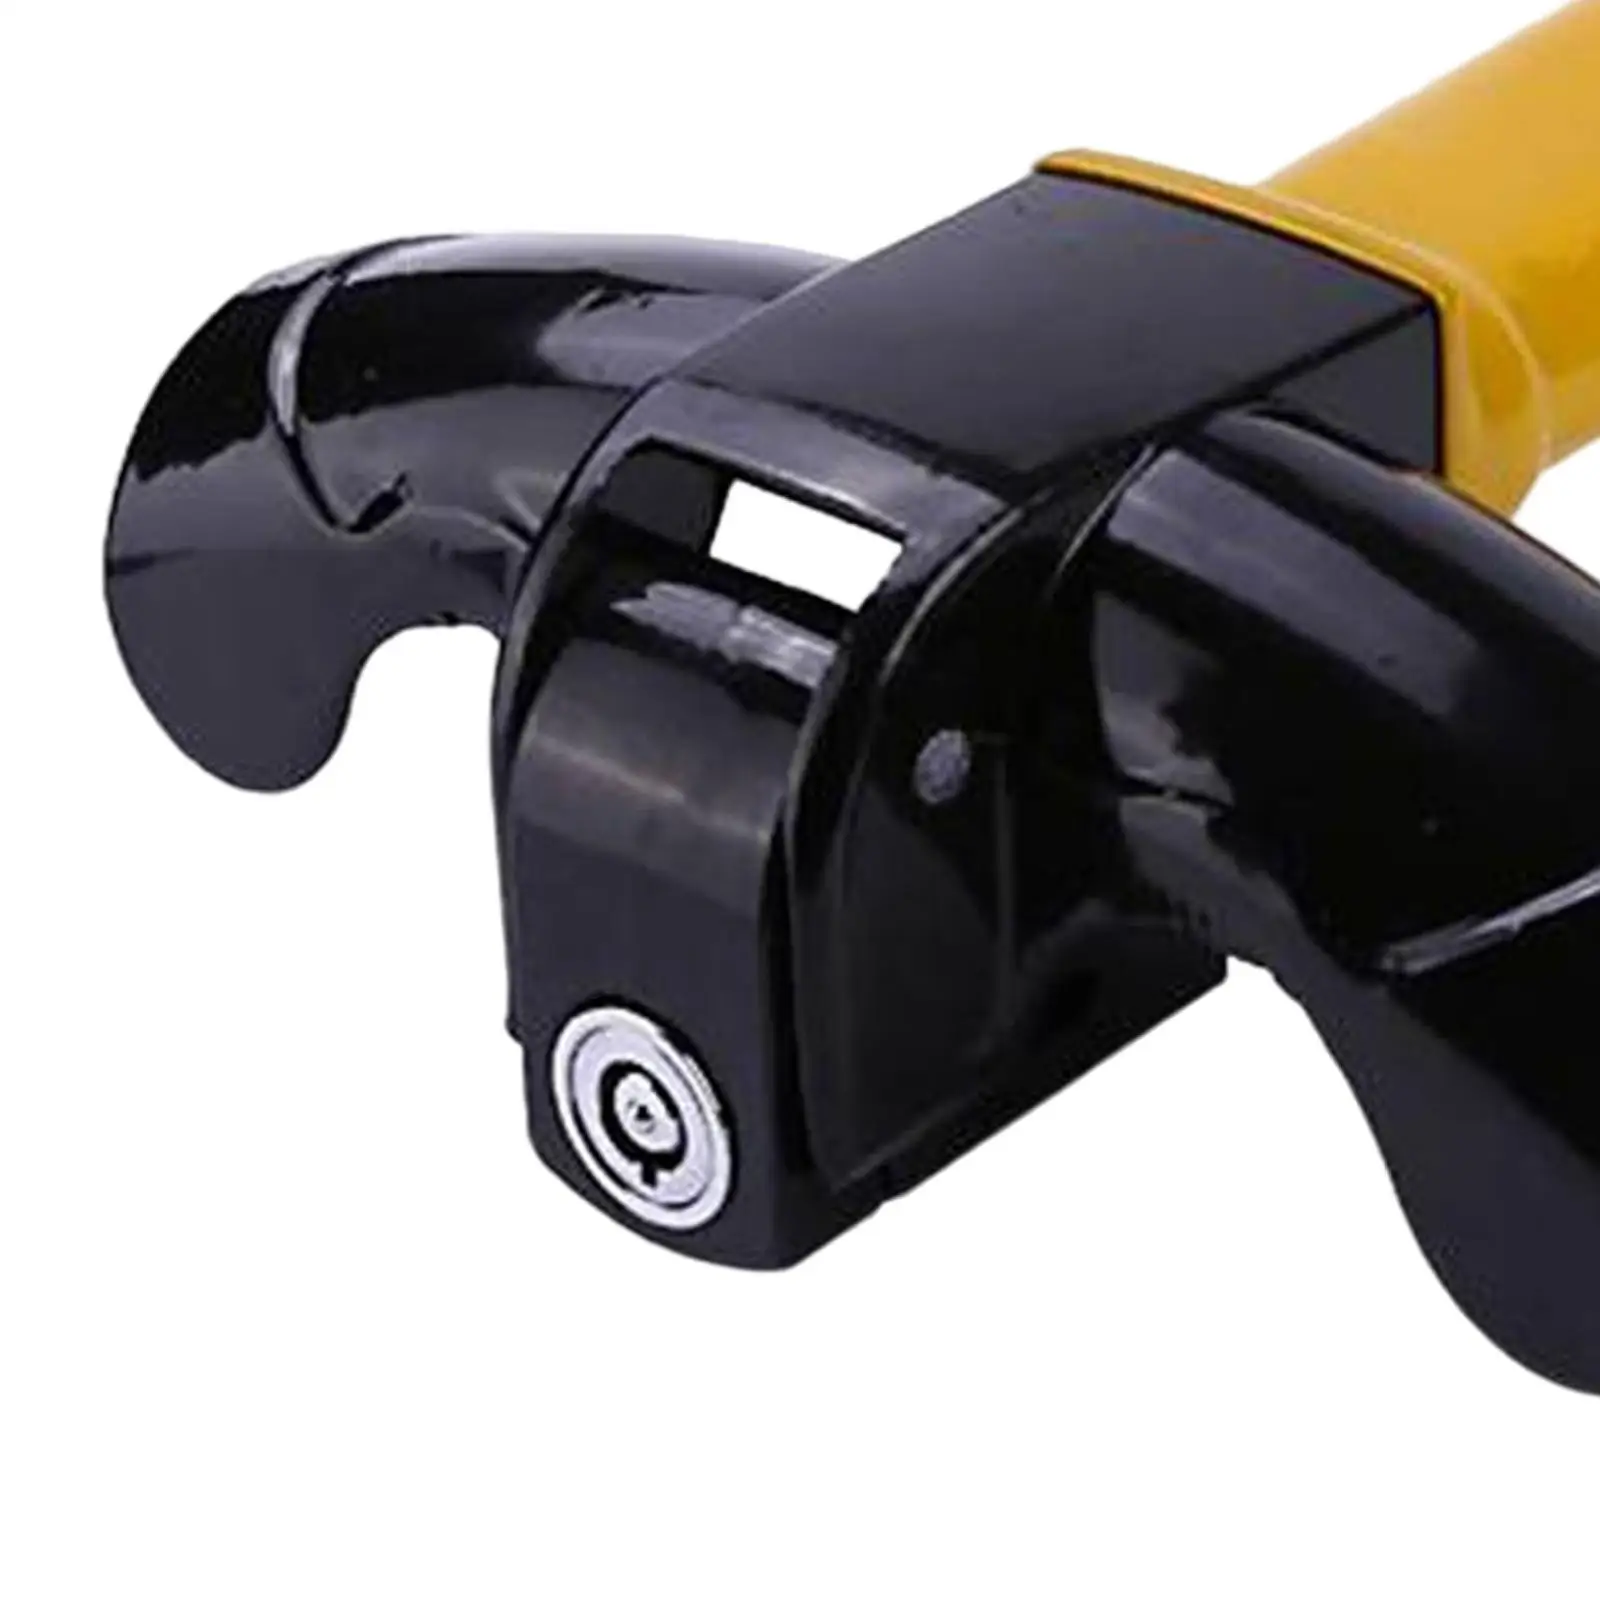 Steering Wheel Lock Tool with 2x Keys Heavy Duty Anti Theft for Truck